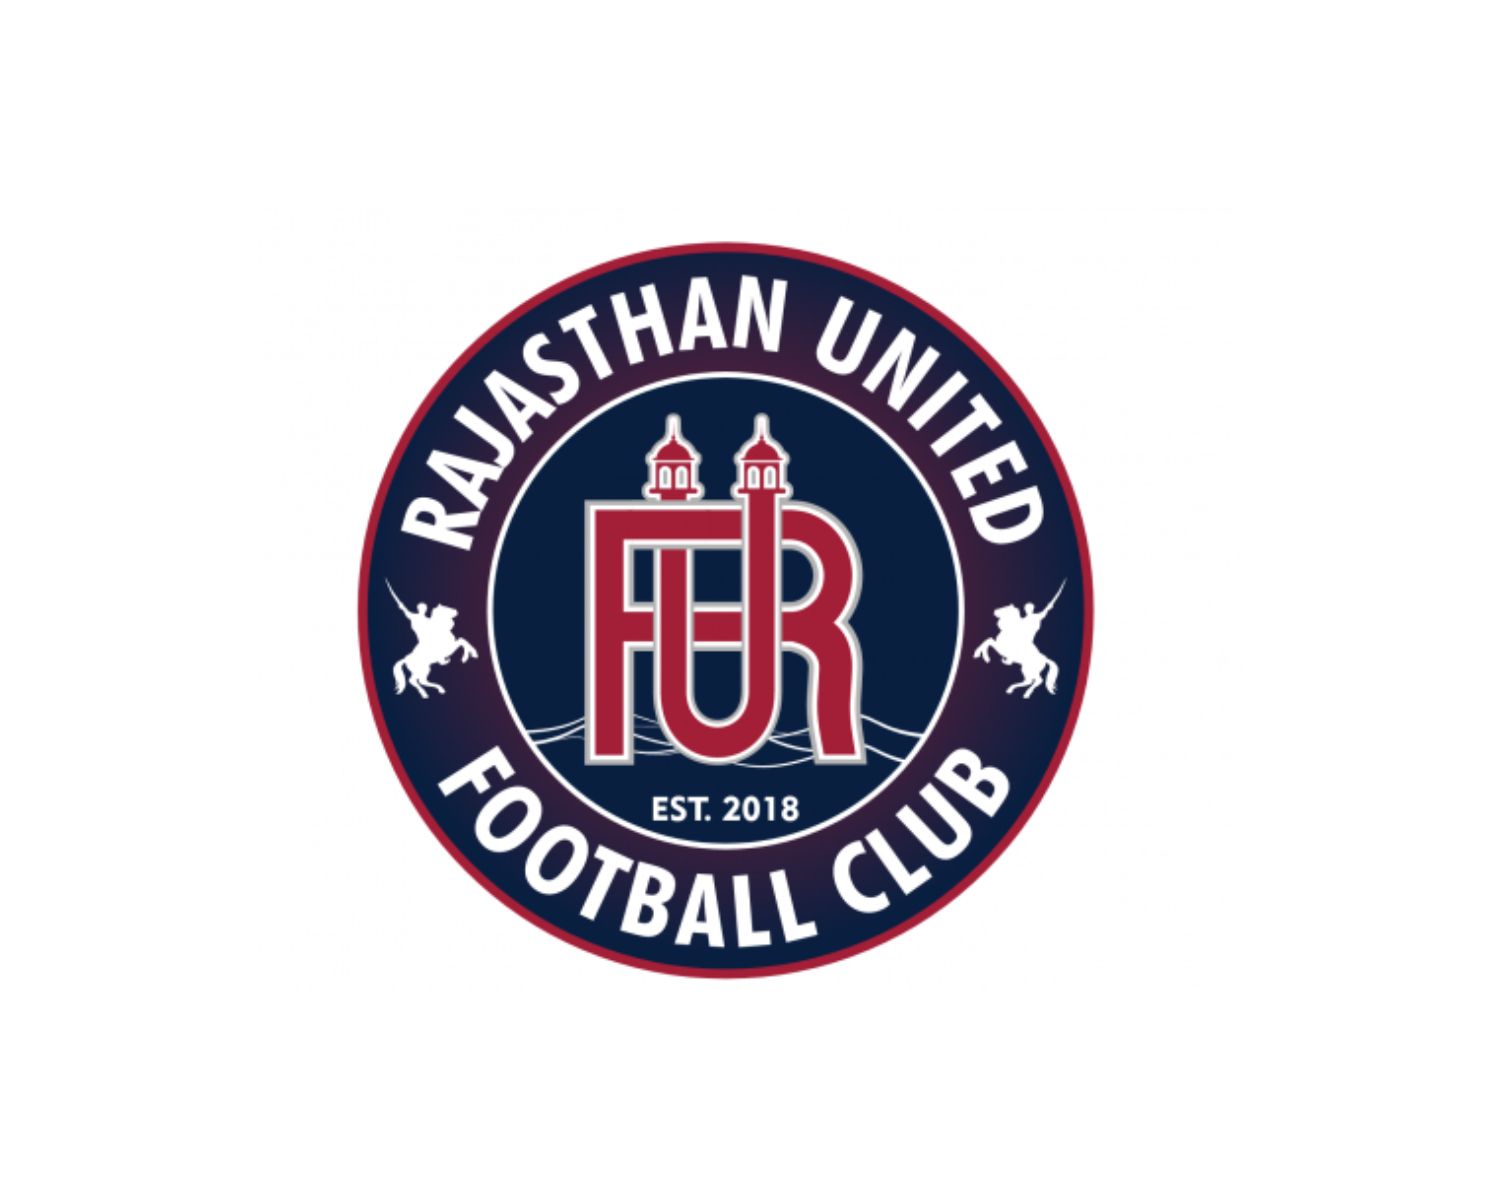 rajasthan-united-fc-23-football-club-facts